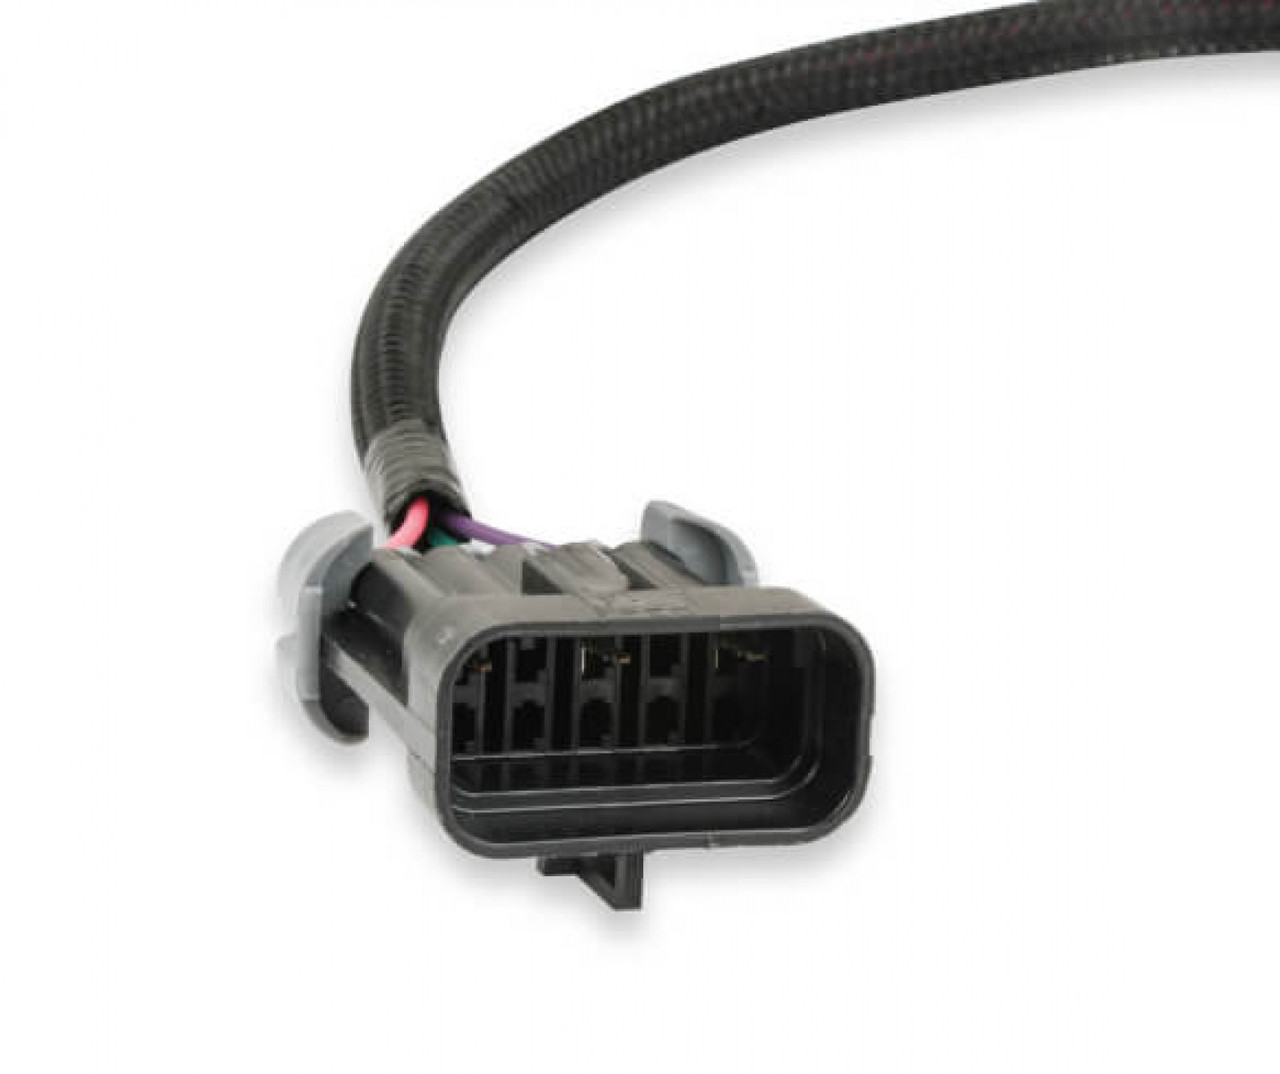 Holley EFI HyperSpark Ignition Adapter (HOE-1558-323)